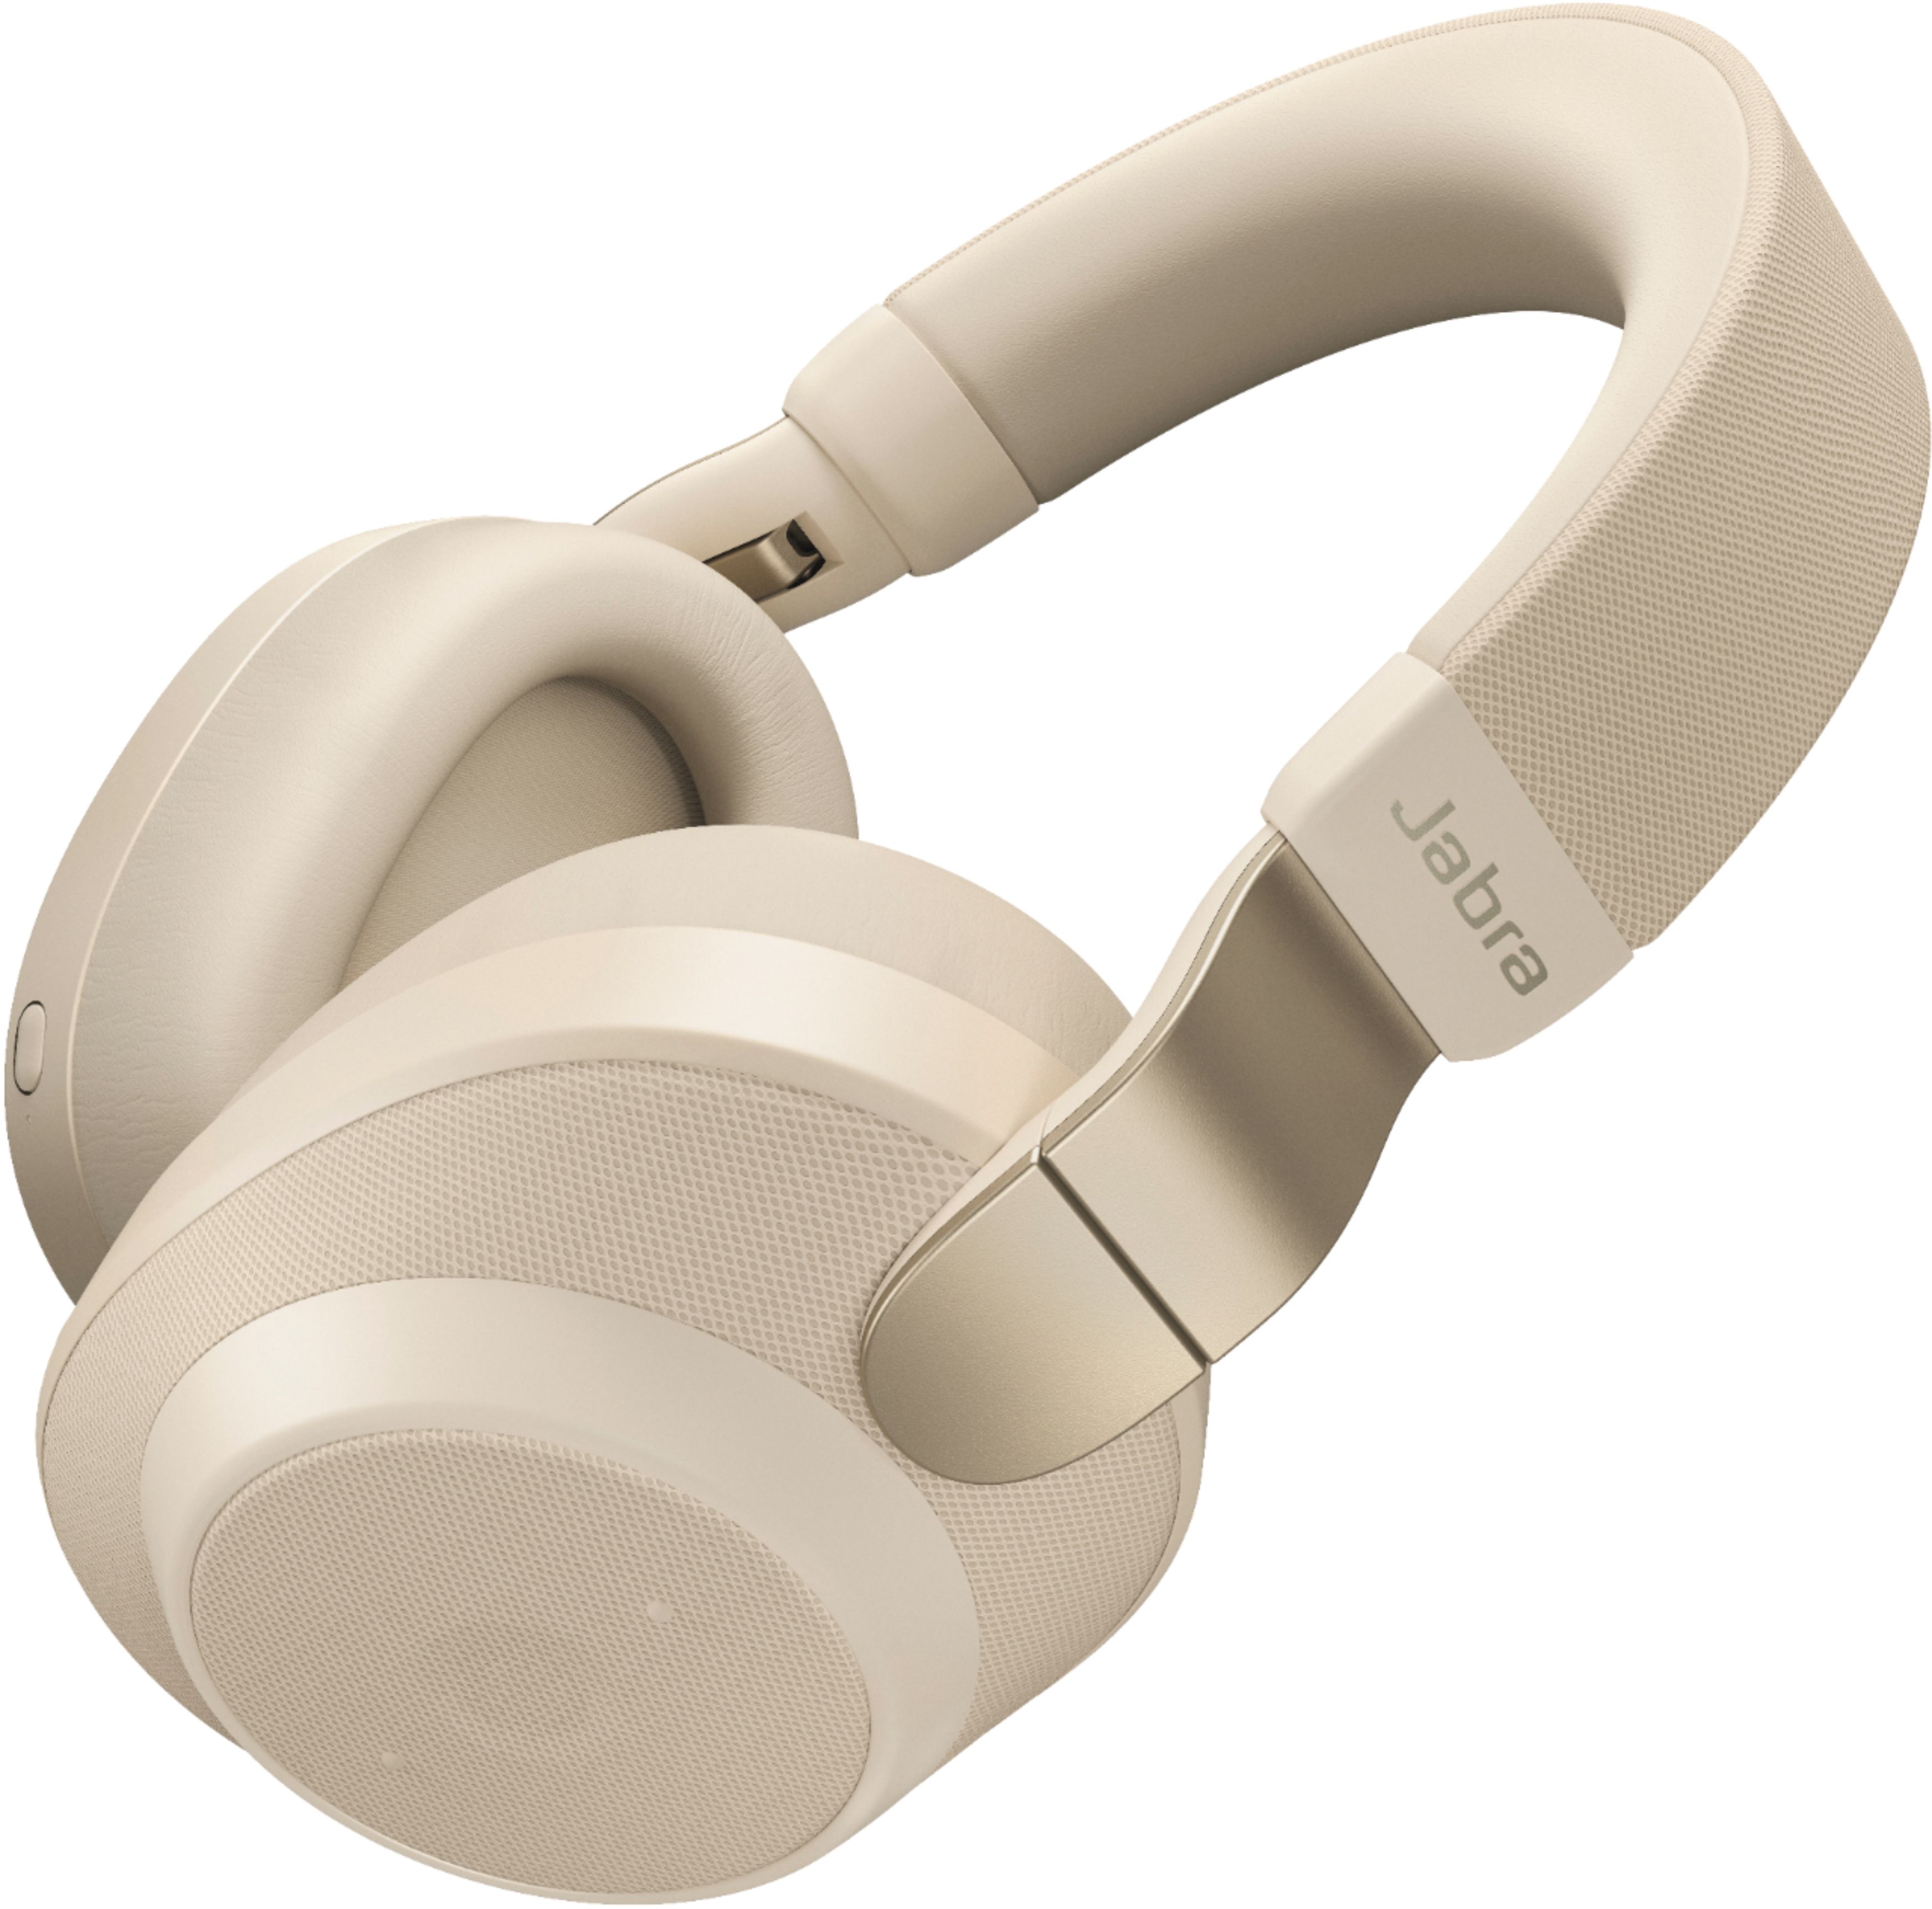 Noise Best Headphones 100-99030002-02 Beige Over-the-Ear Wireless Elite Buy: Gold 85h Jabra Cancelling